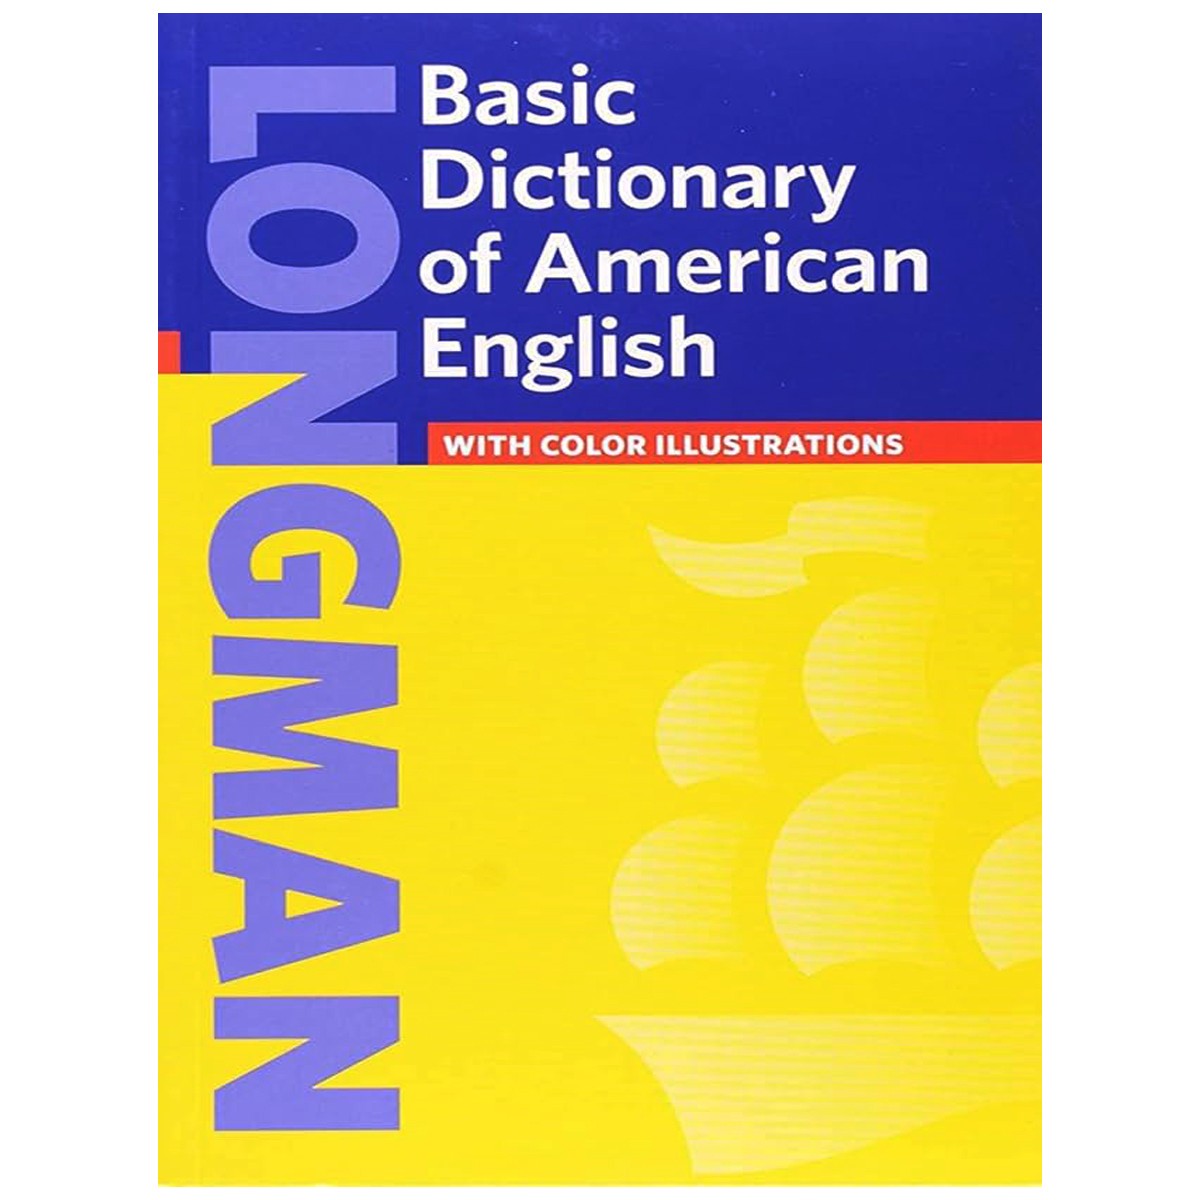 Longman Basic Dictionary of American English